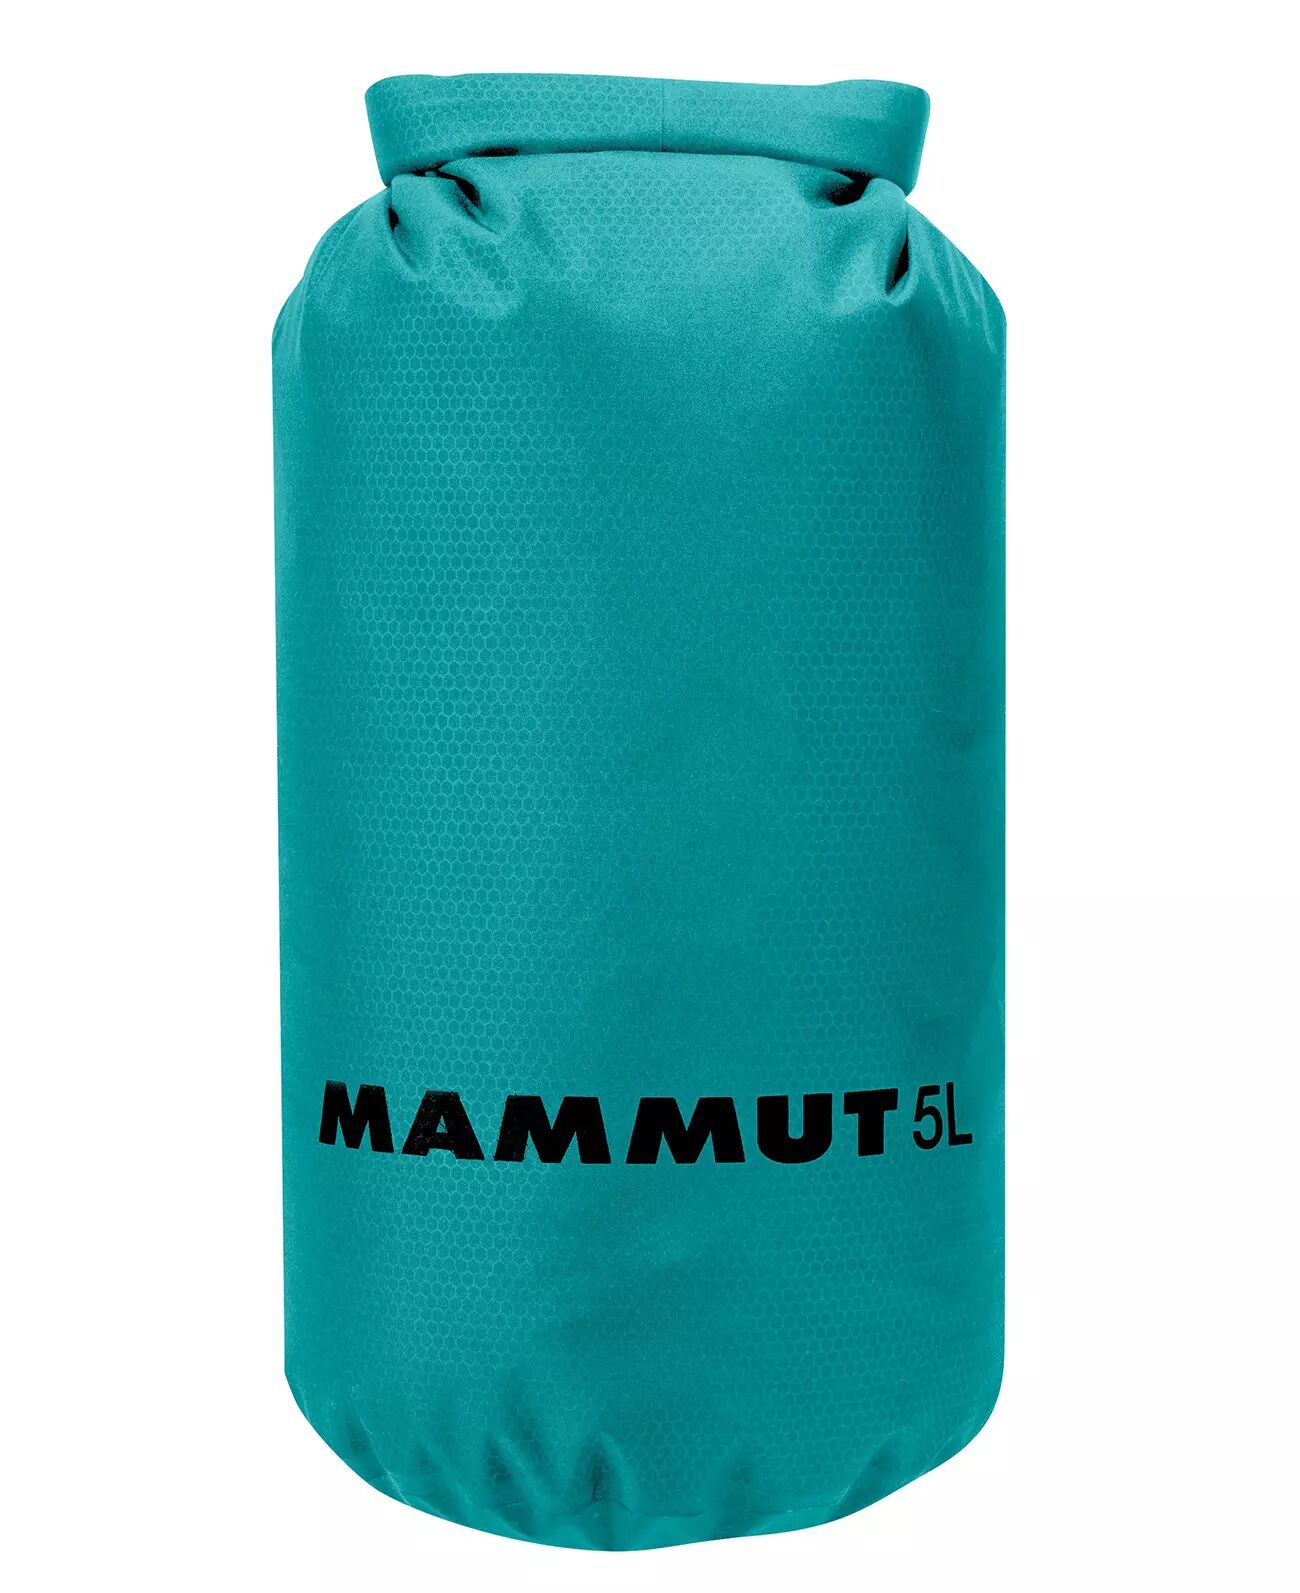 Mammut Drybag Light 5L - Bag - Turkis